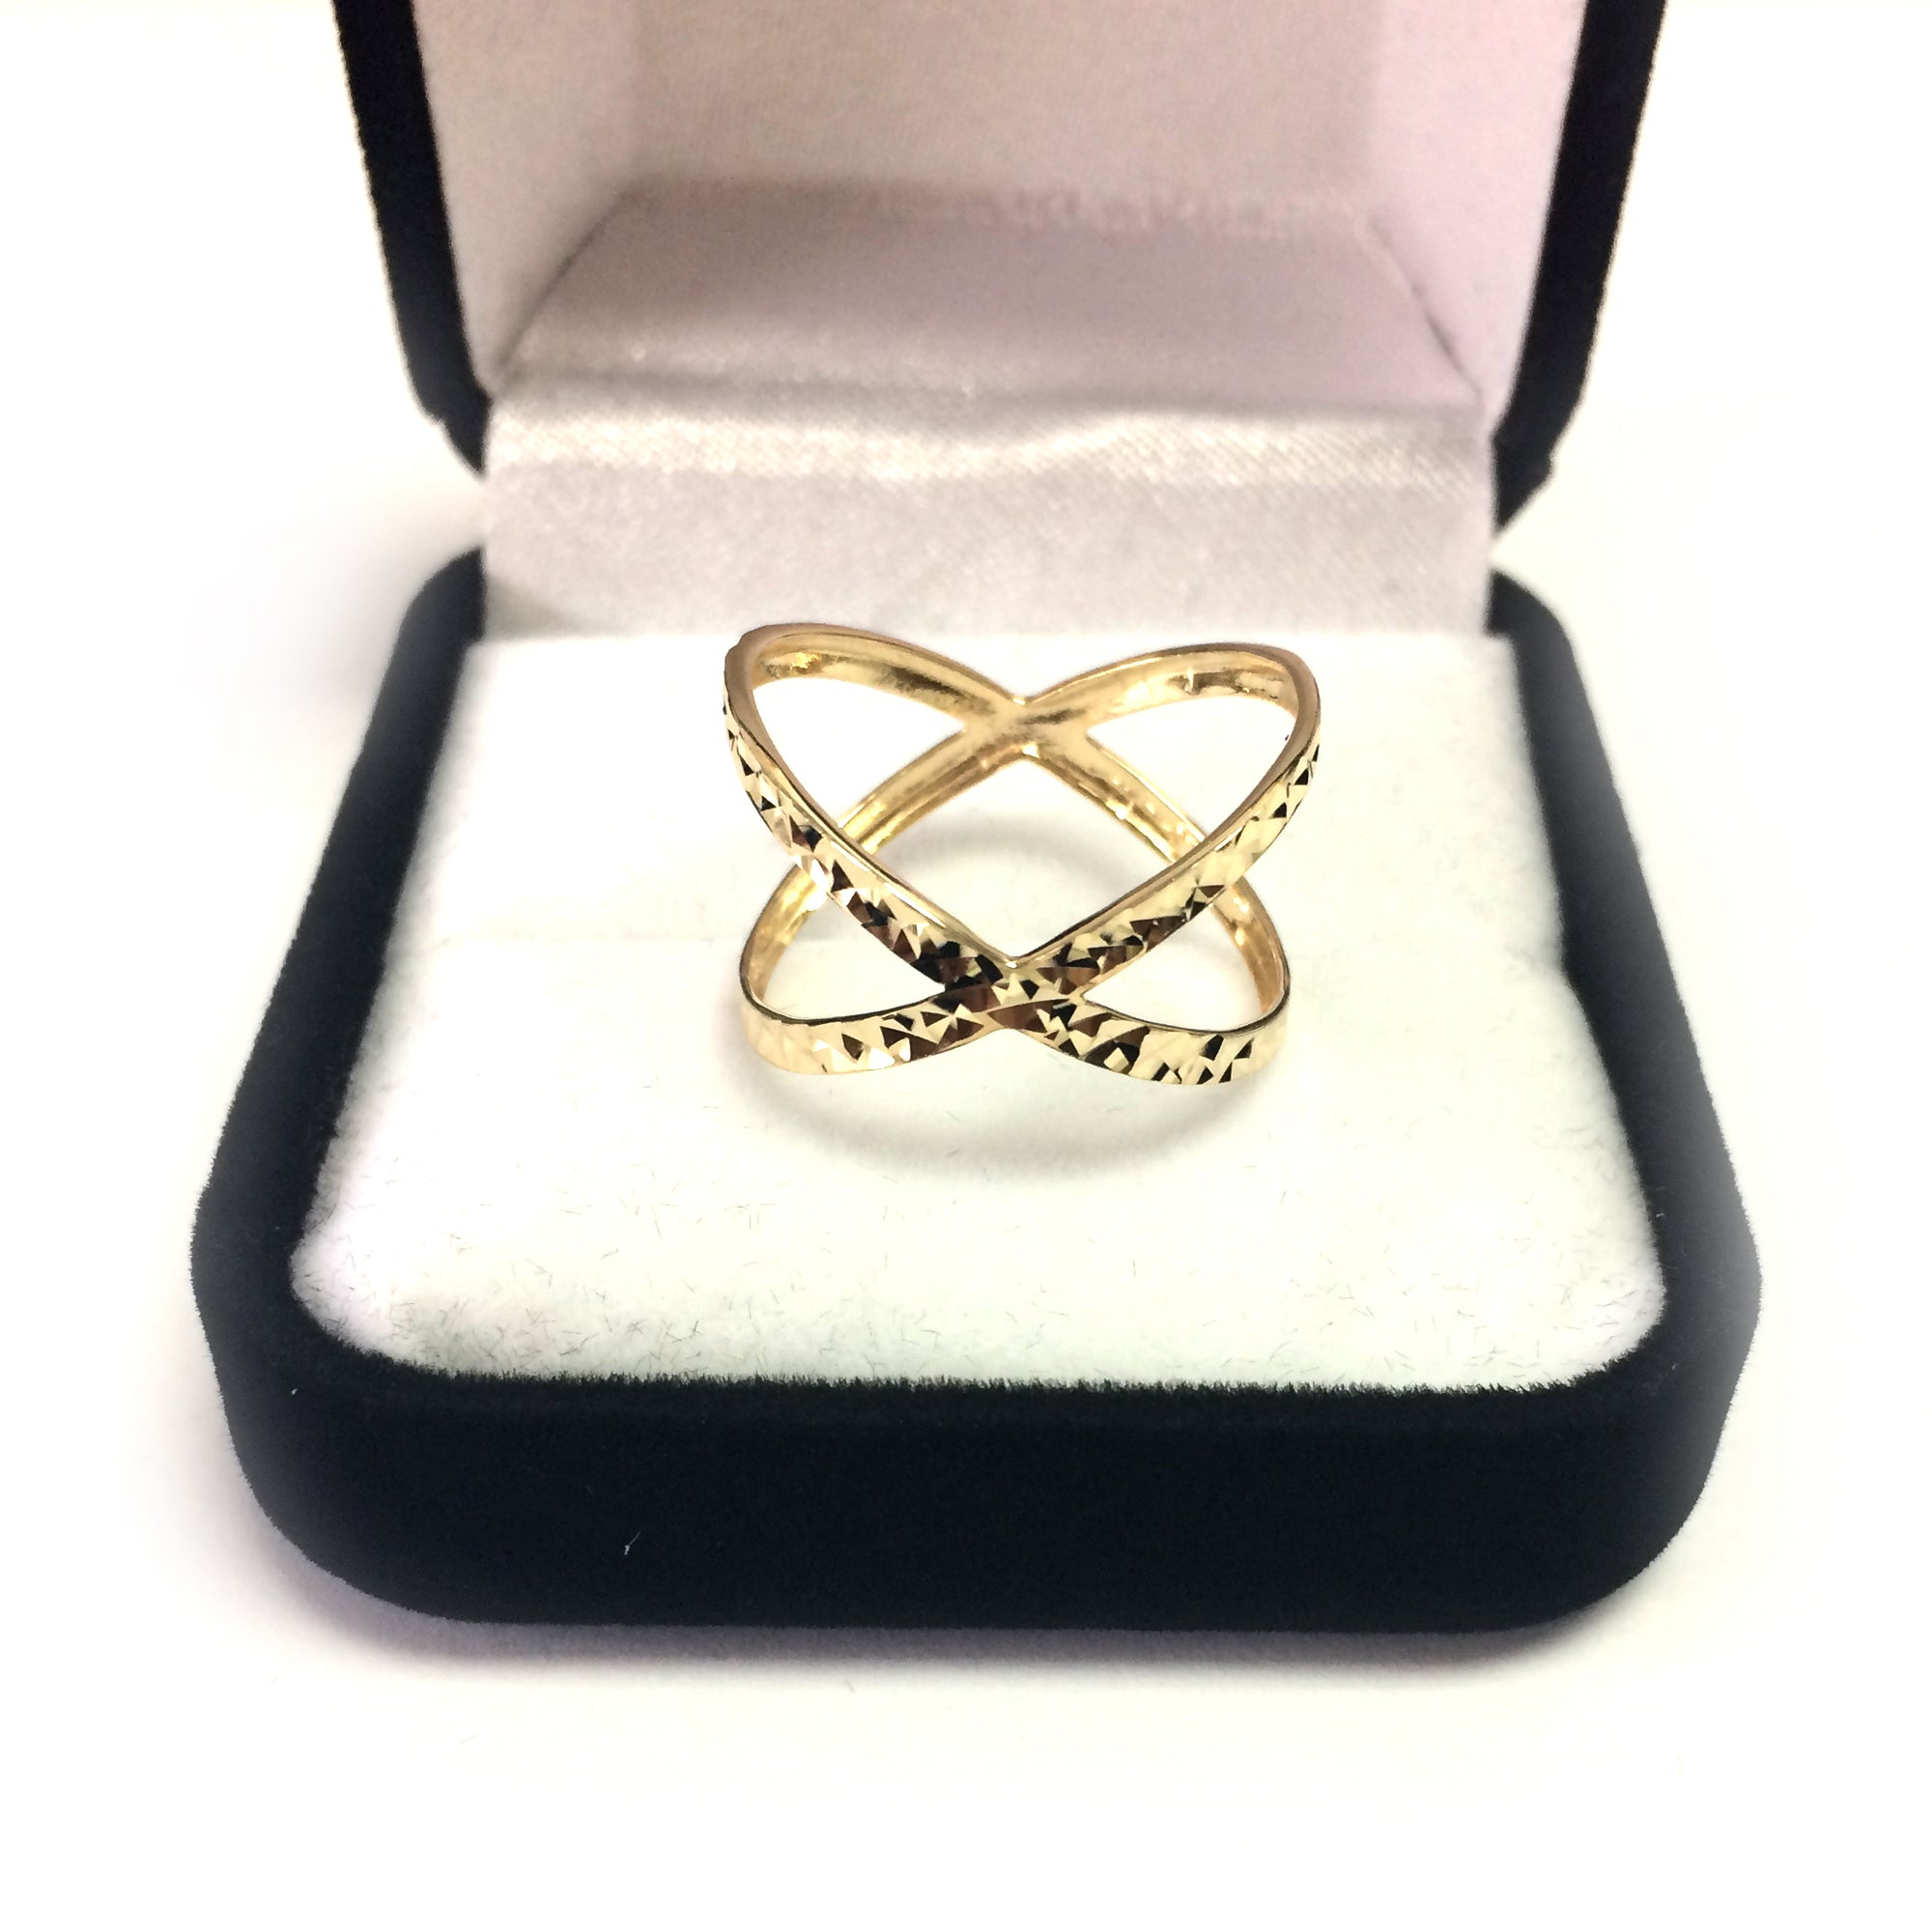 14K Yellow Gold Diamond Cut Cross Over X Design Fashion Ring